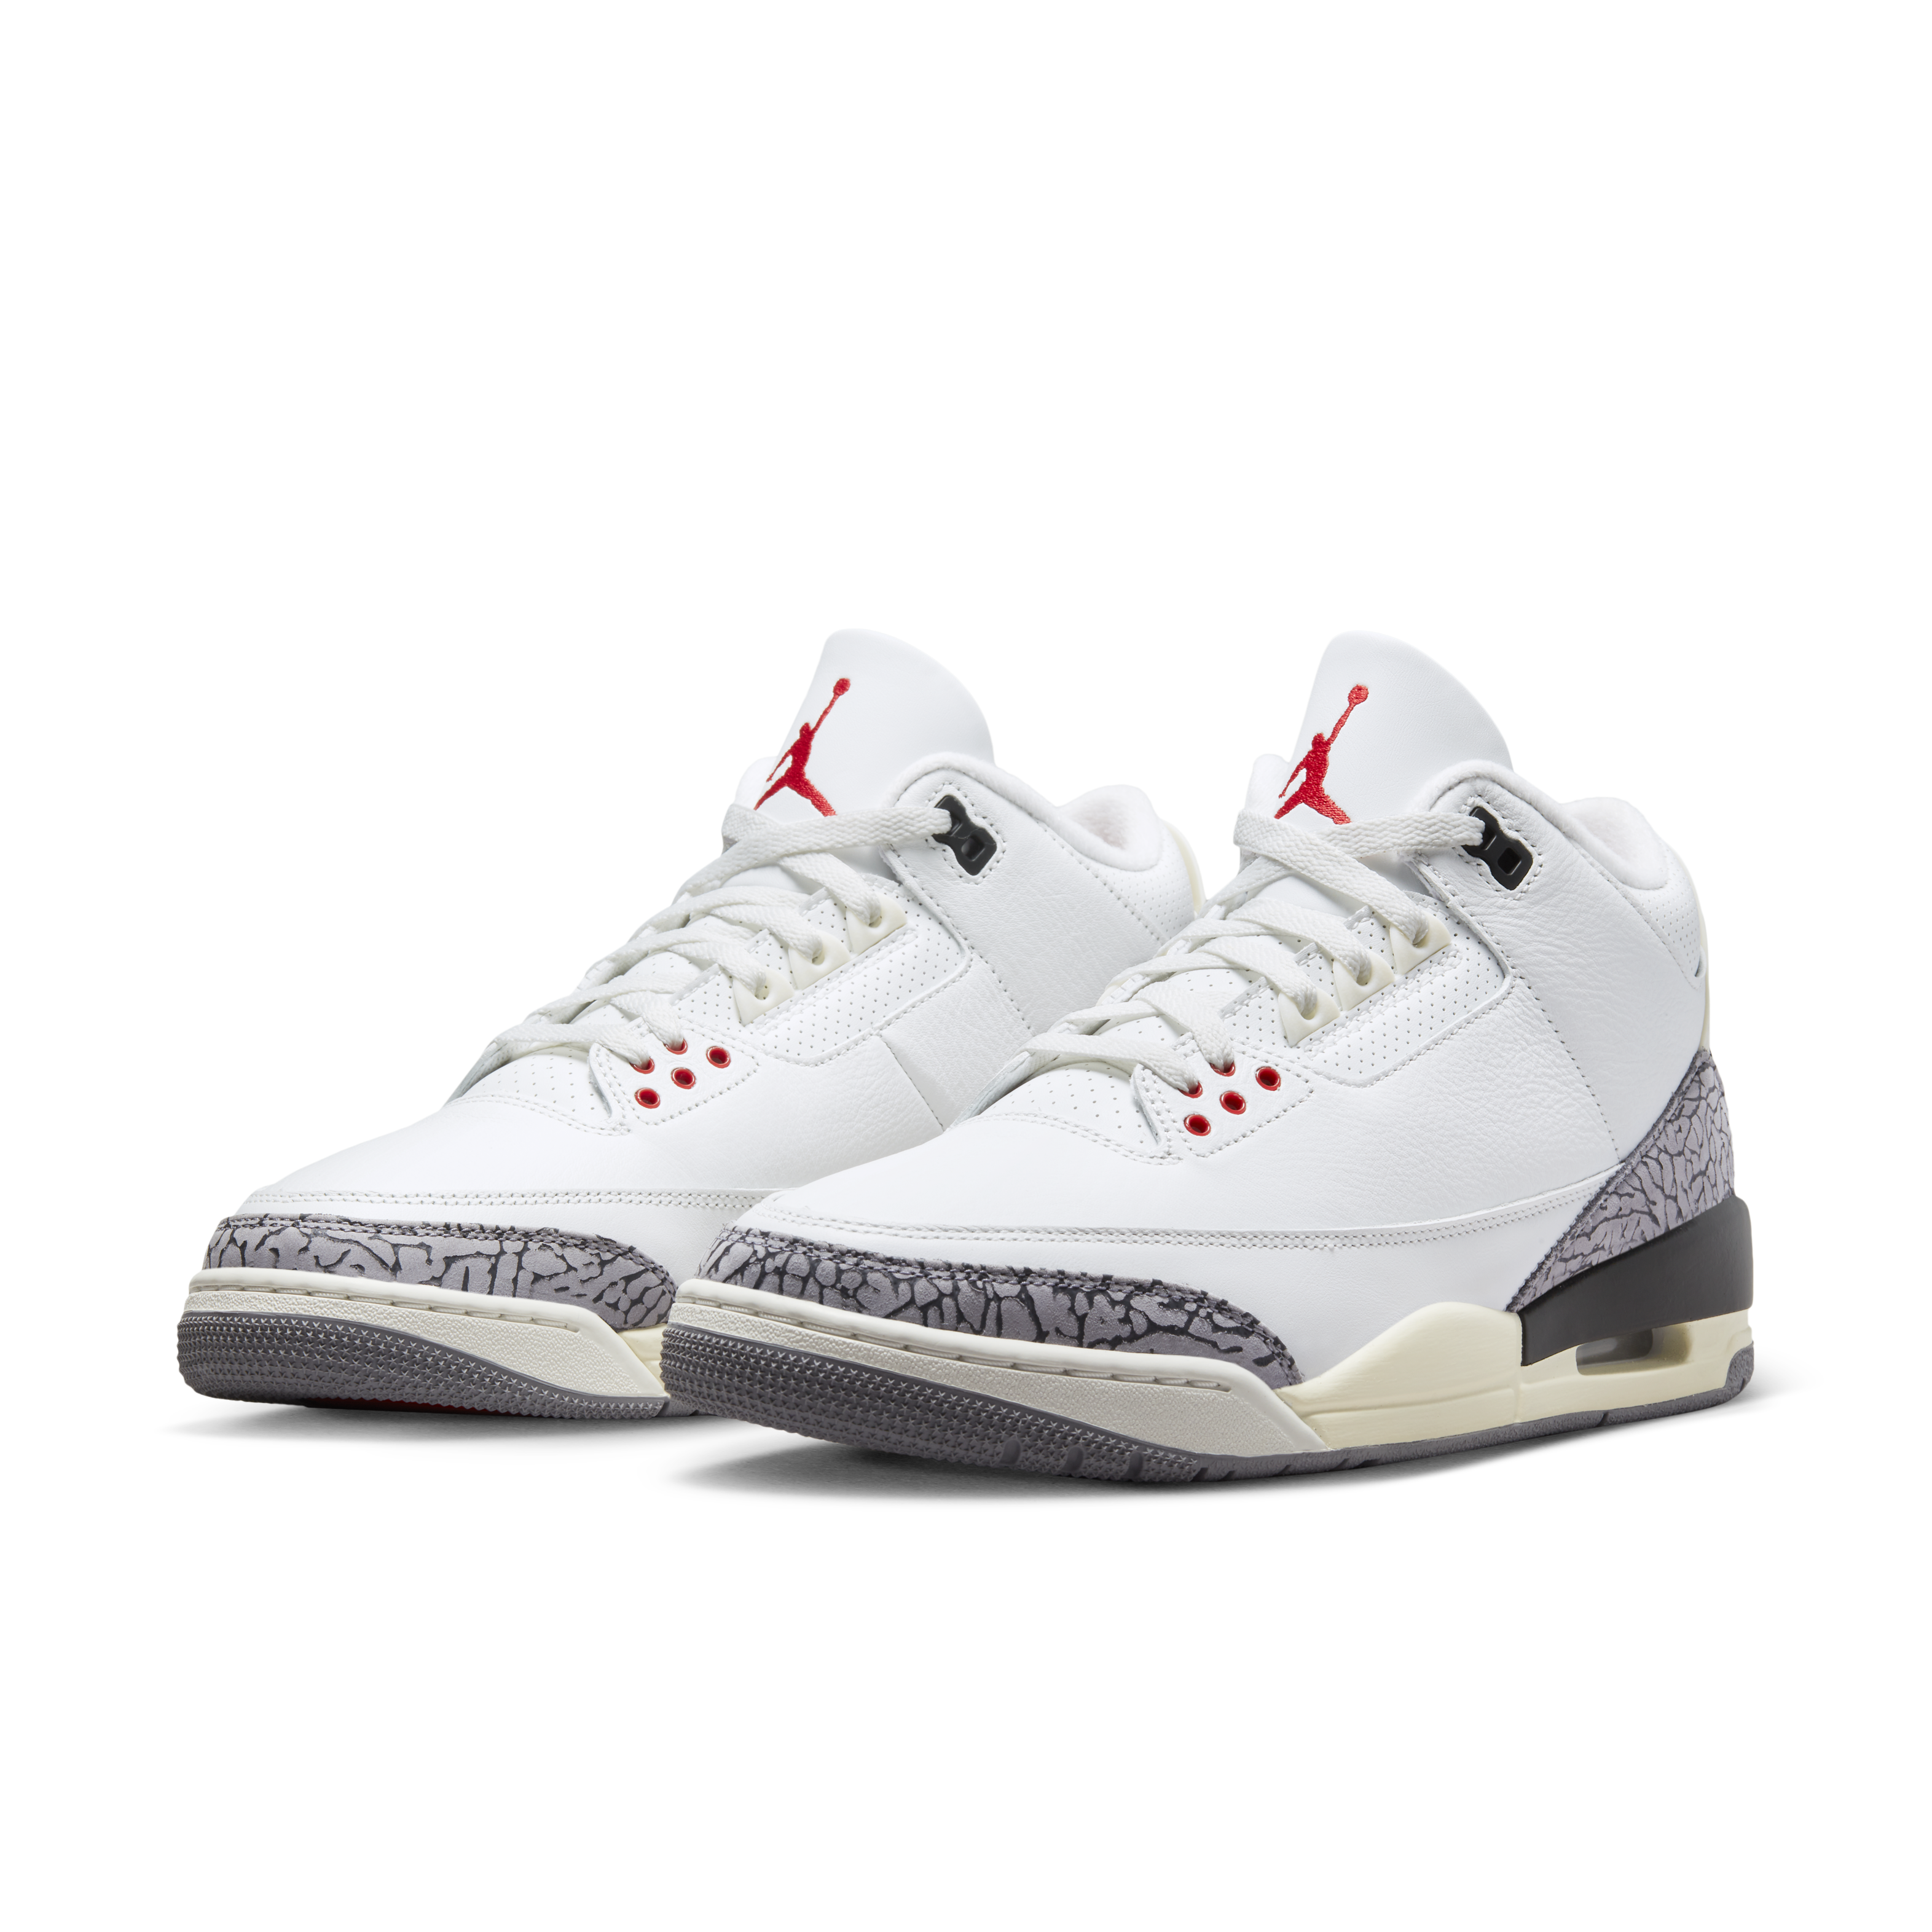 Air Jordan Retro 'White Cement' 3